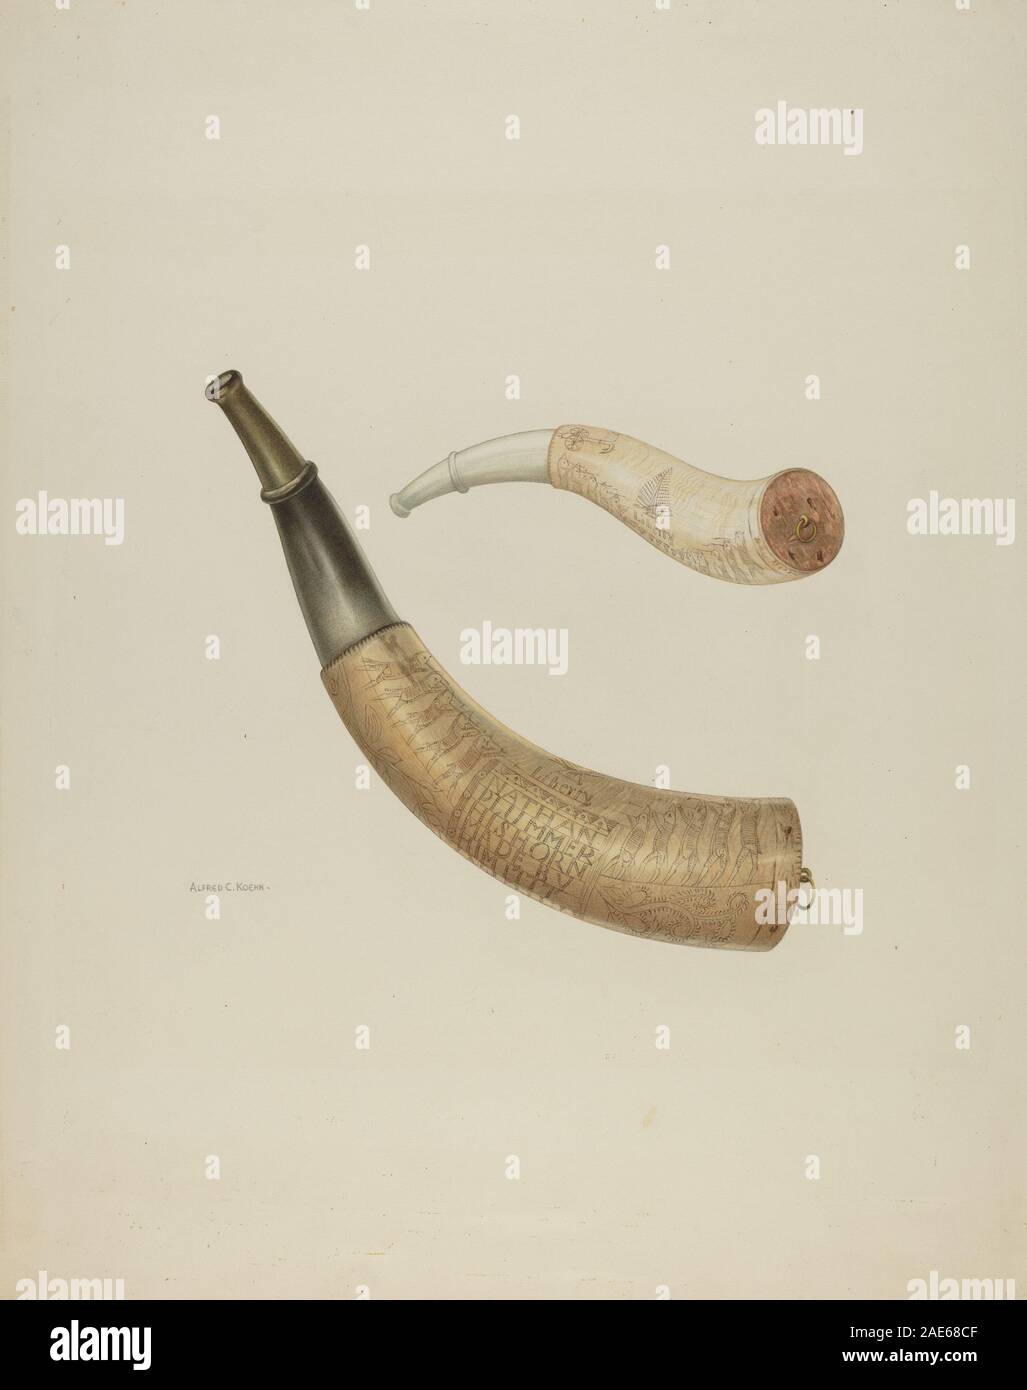 Pulver Horn; 1935/1942 Alfred Koehn, Pulver Horn, 1935-1942 Stockfoto